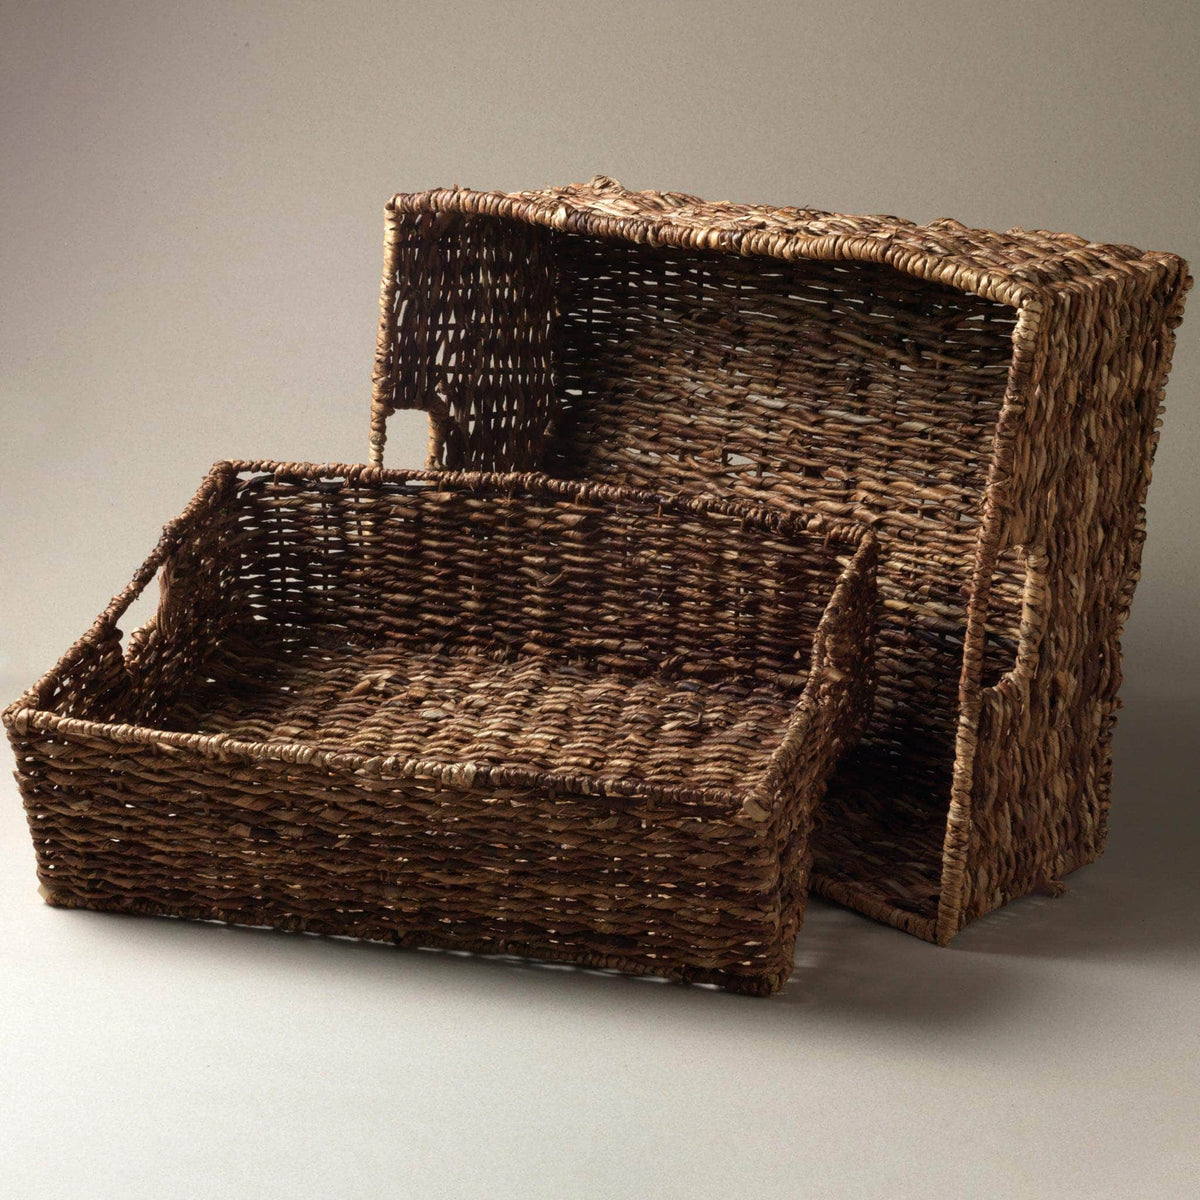 Rectangular Wicker Baskets